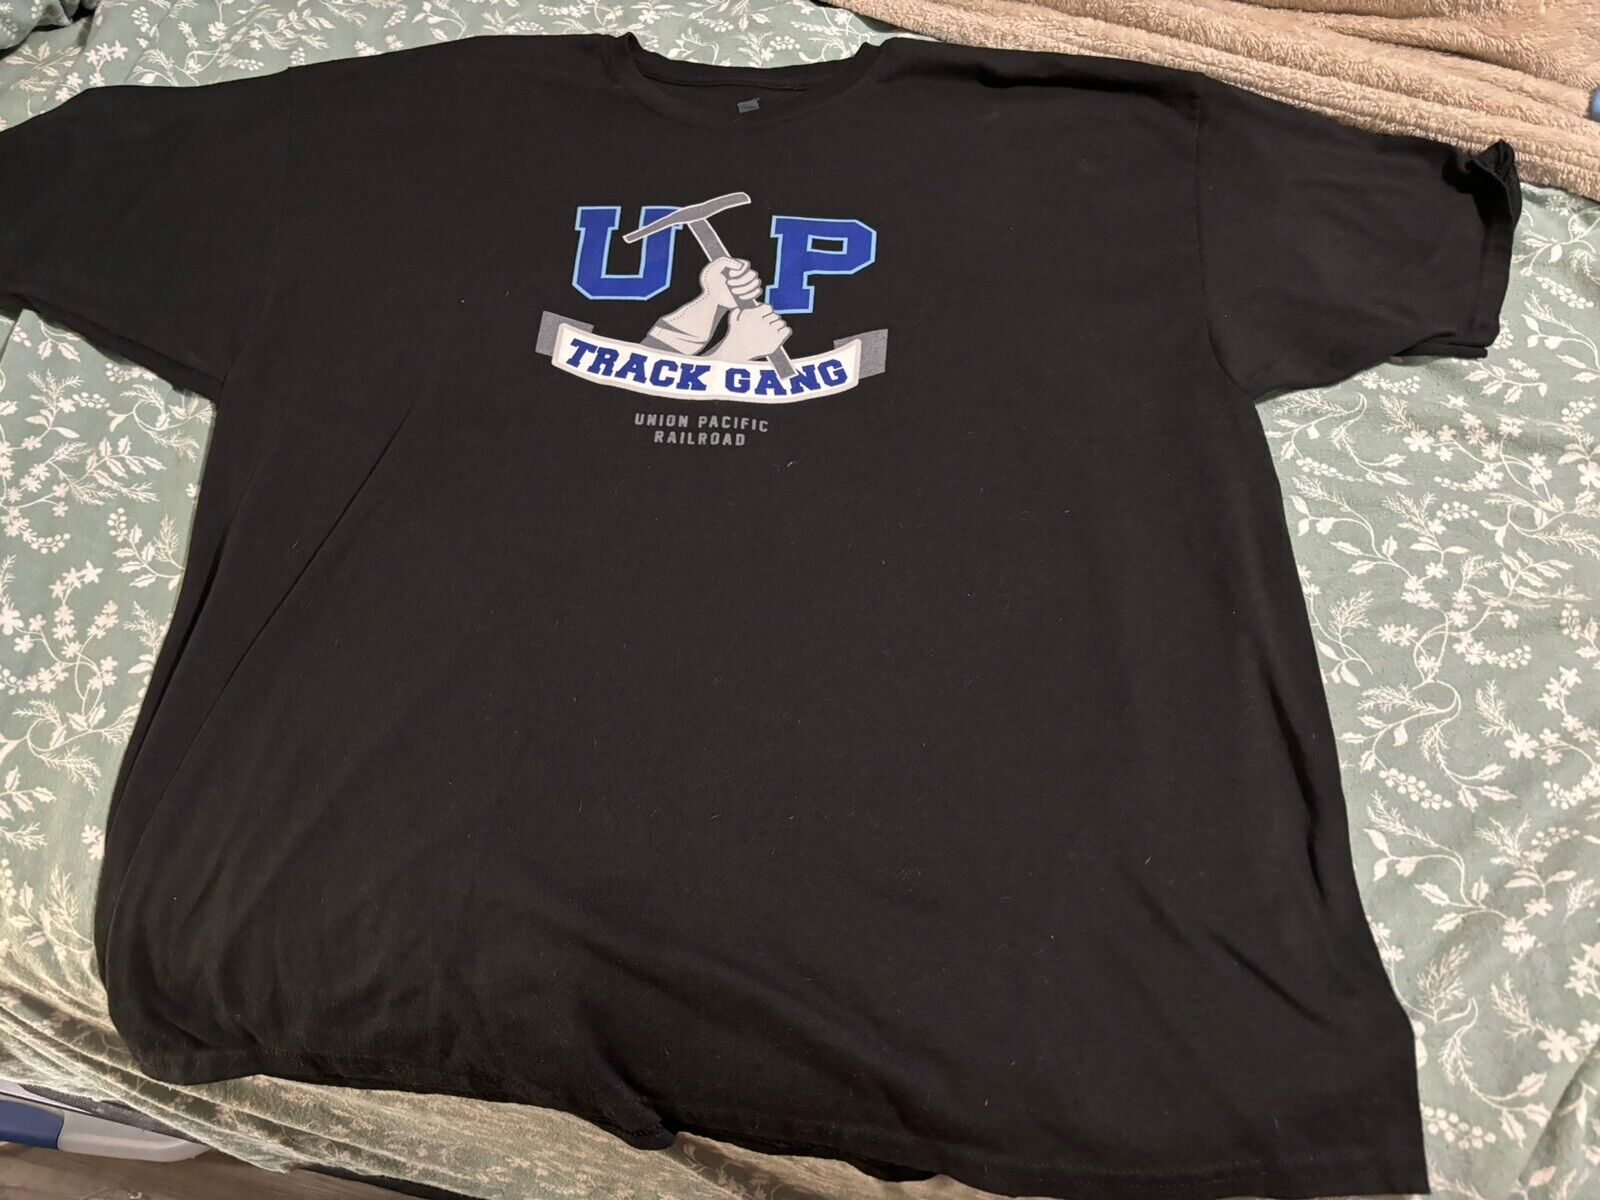 Union Pacific Track Gang T-Shirt